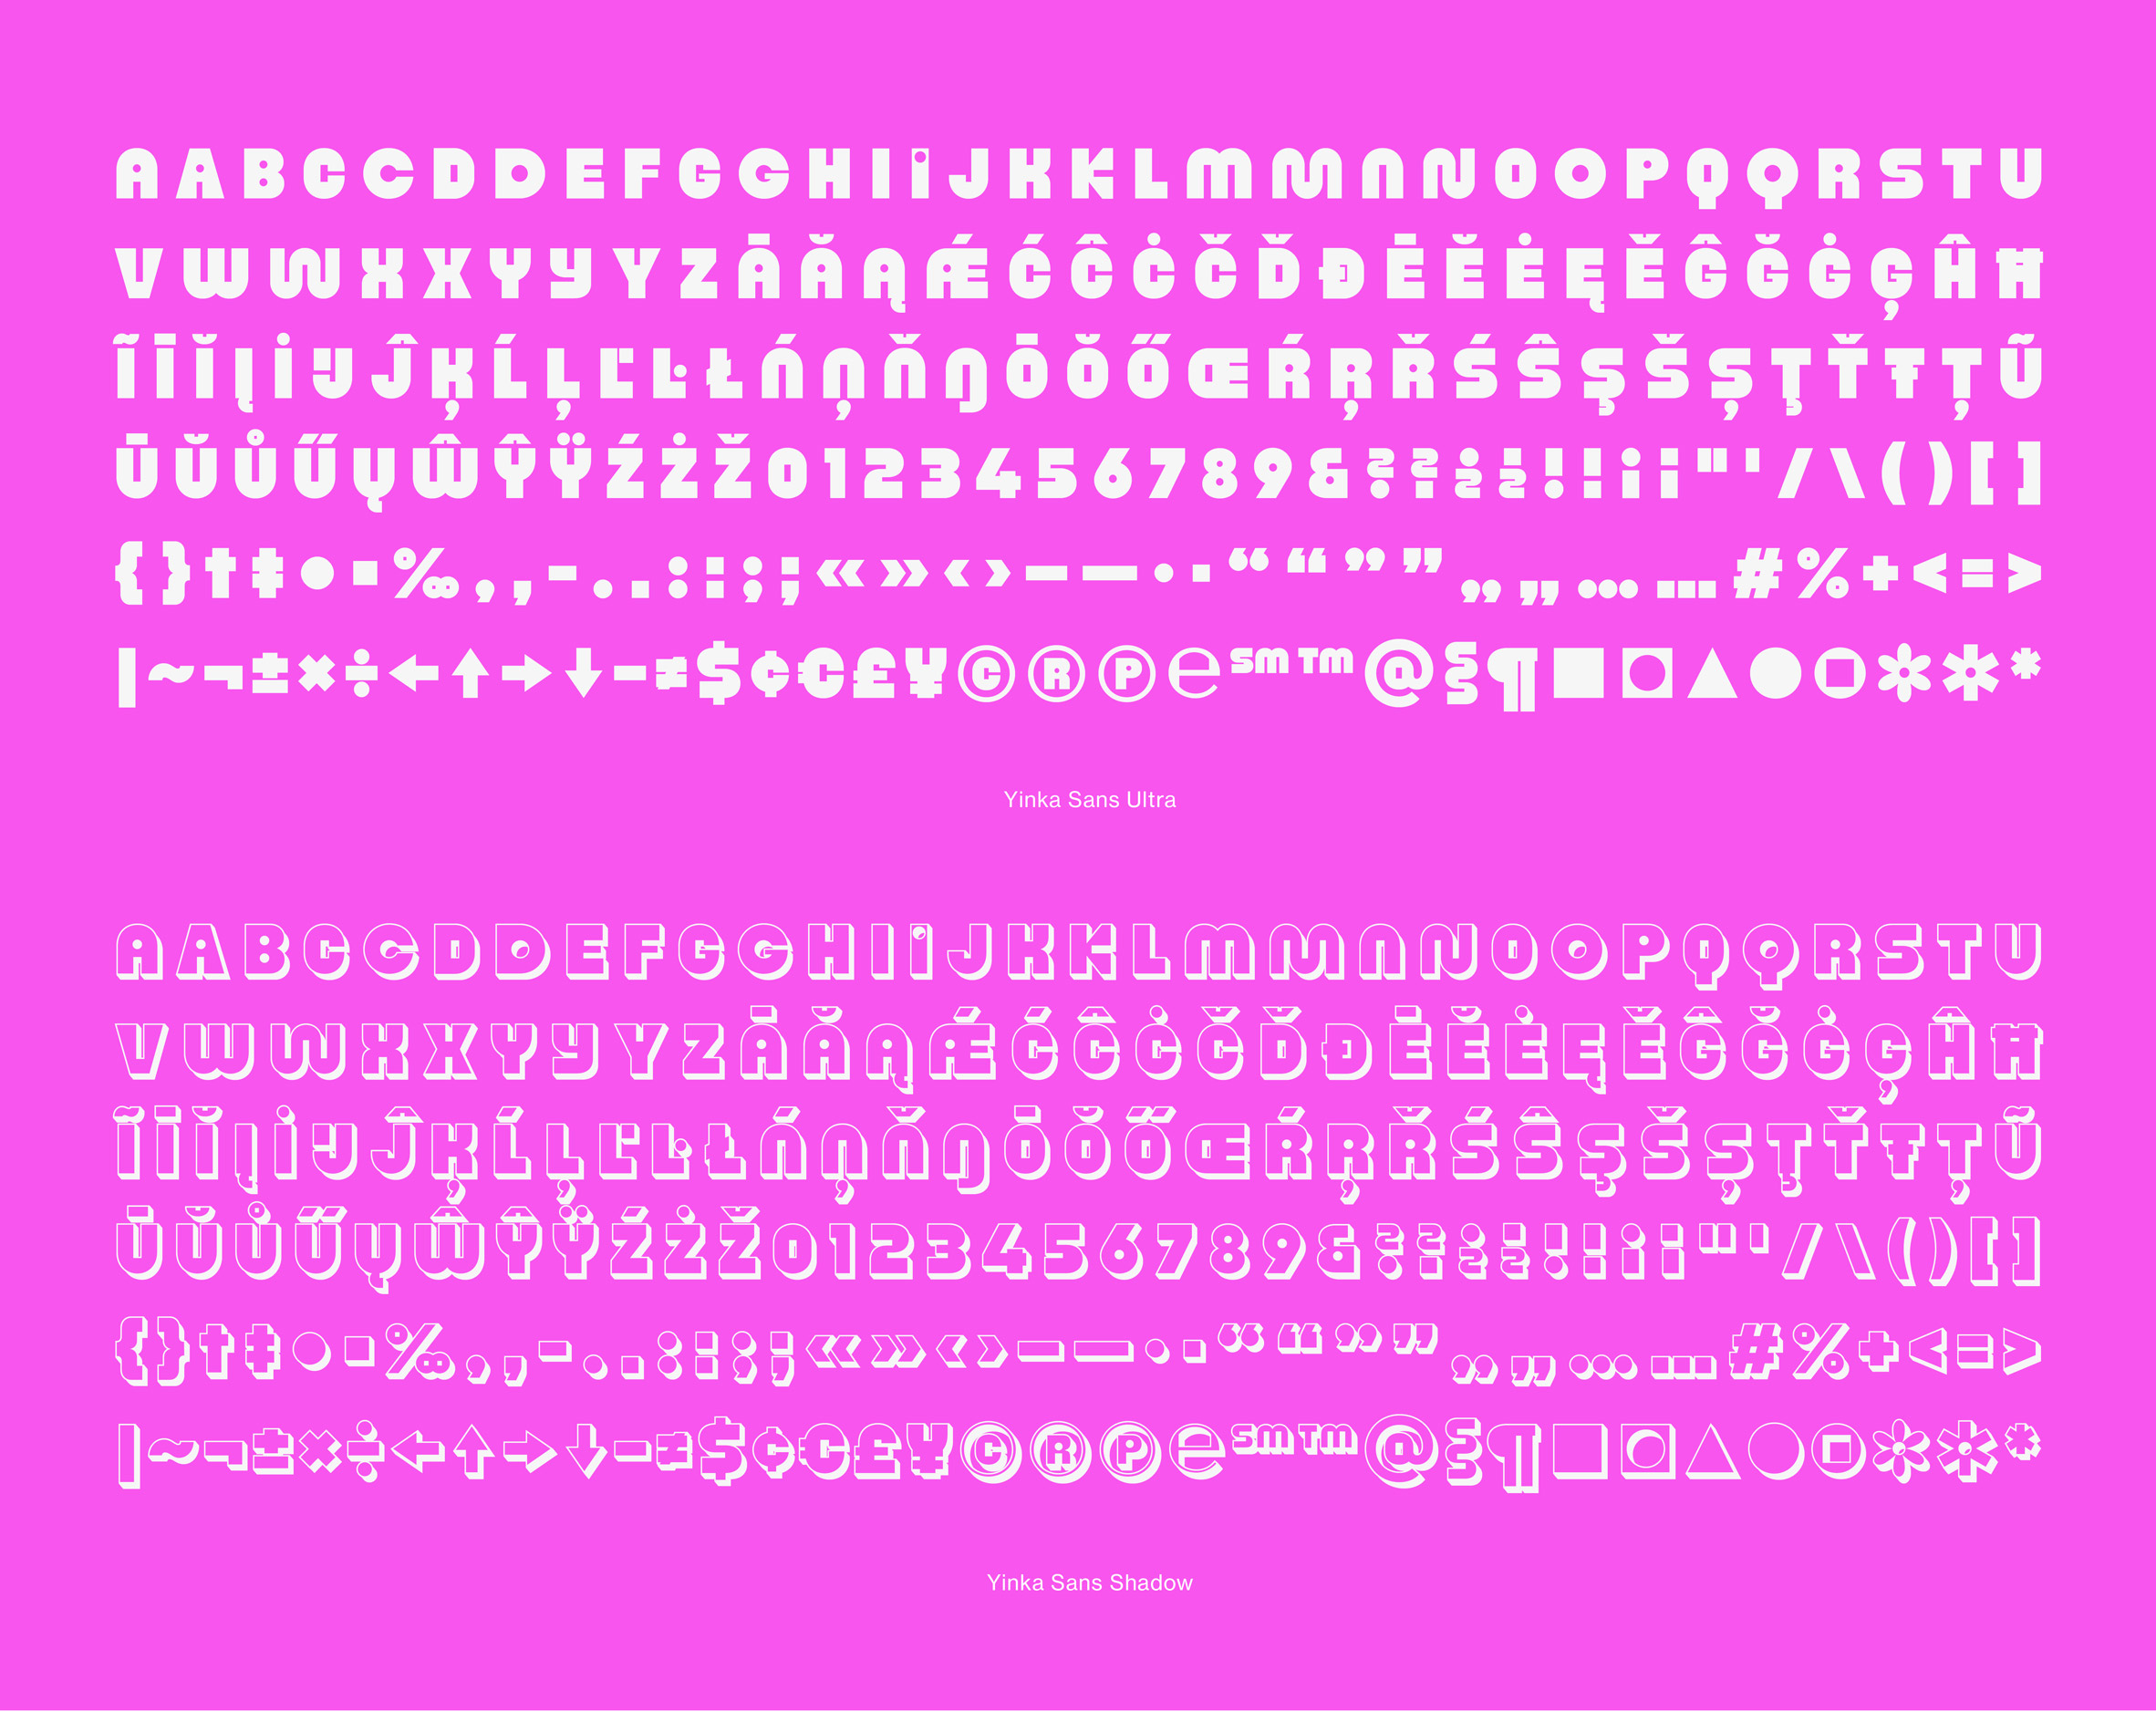 Yinka Sans Ultra and Yinka Sans Shadow typefaces by British Standard Type